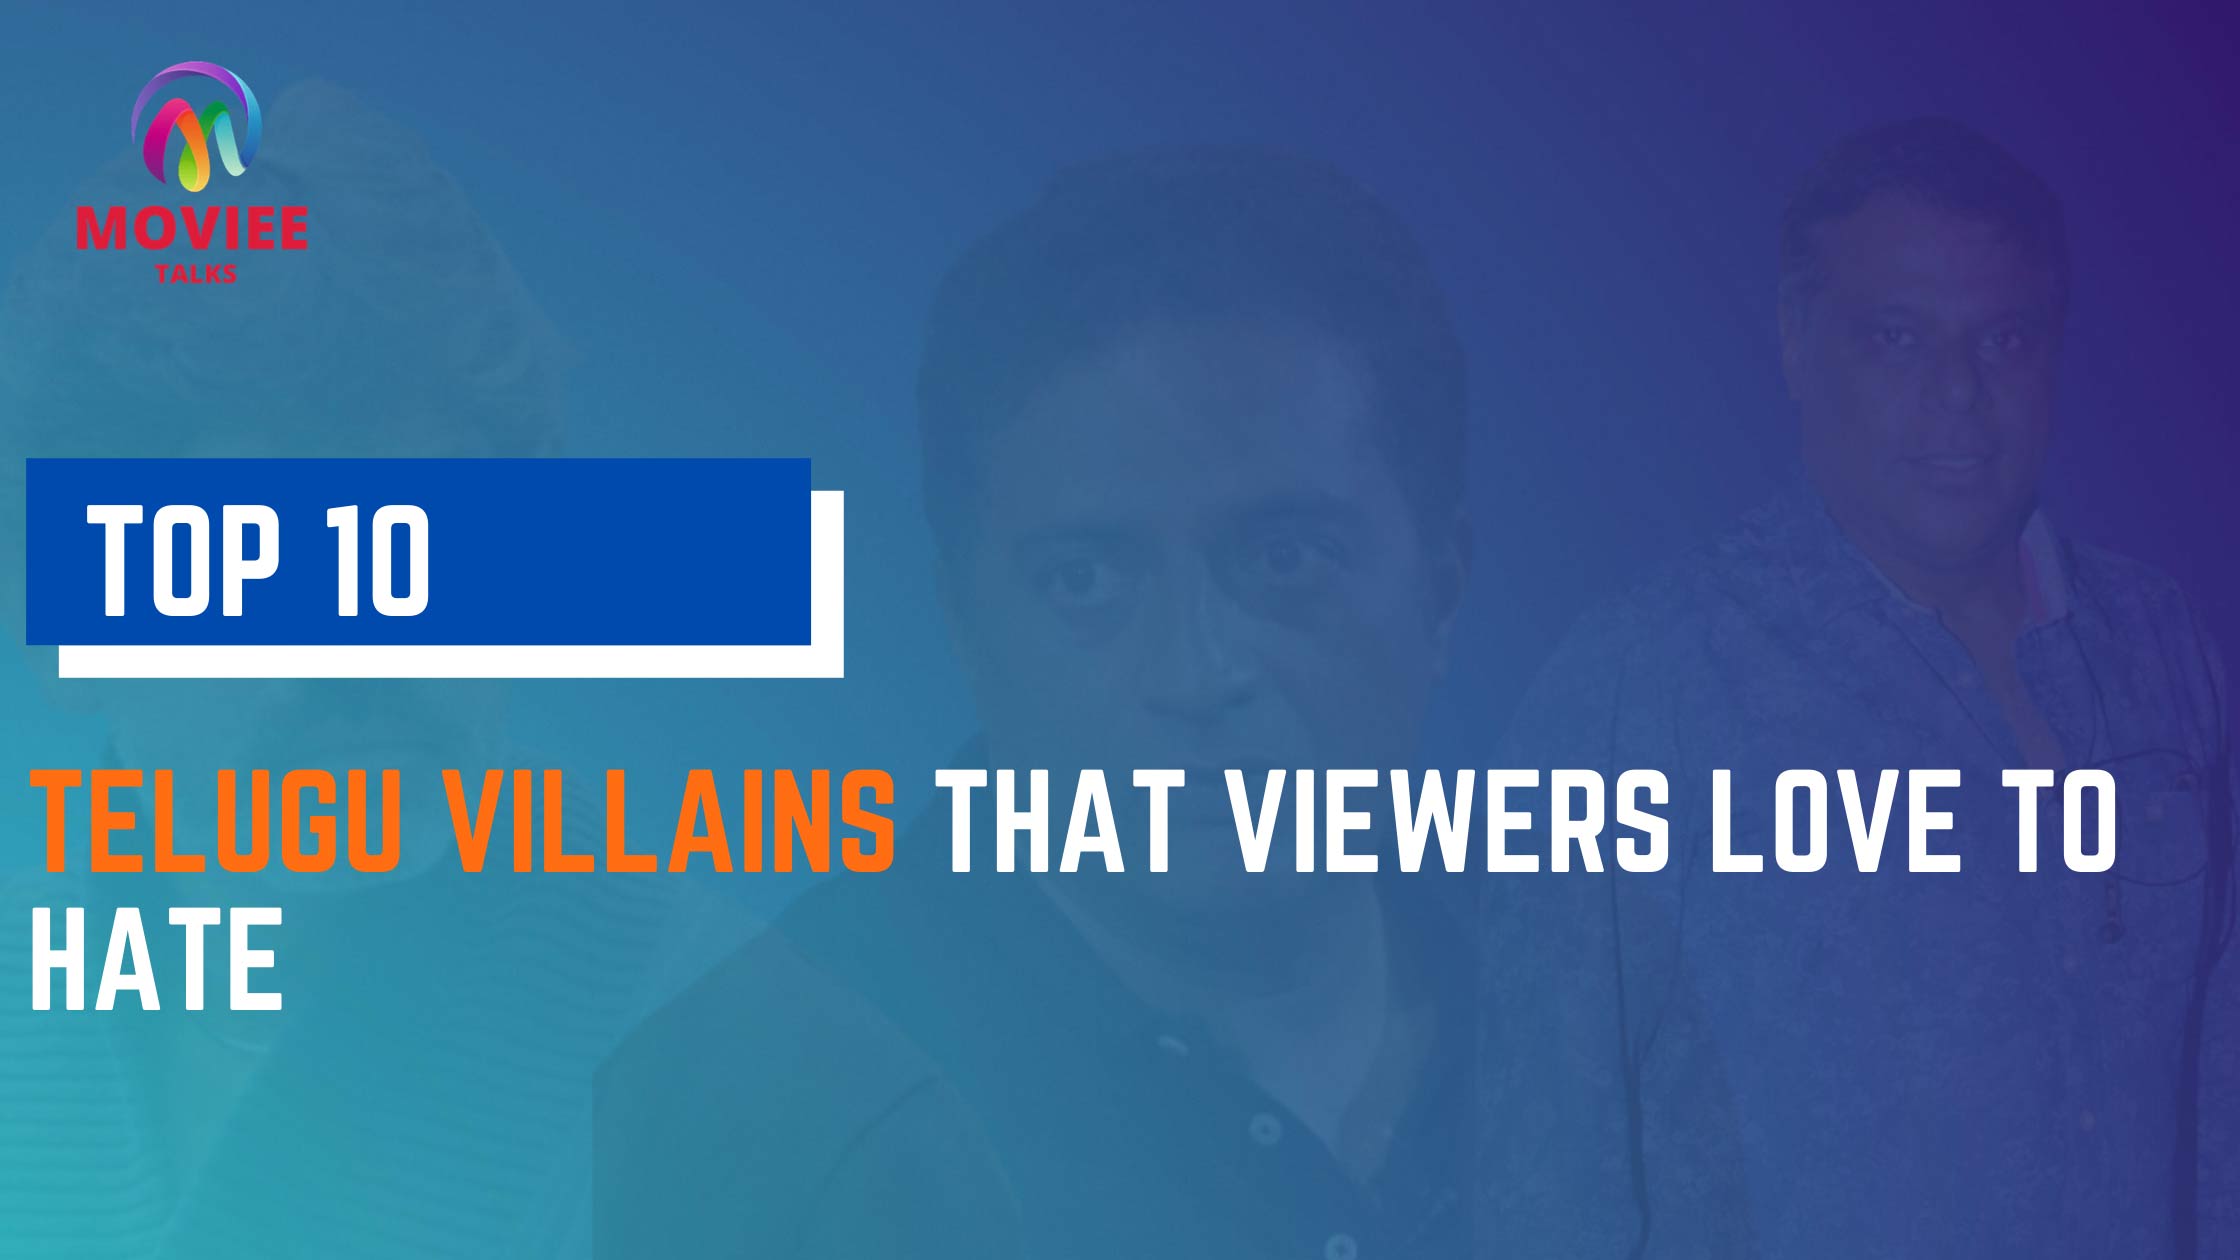 Top 10 Telugu Villains That Viewers Love to Hate